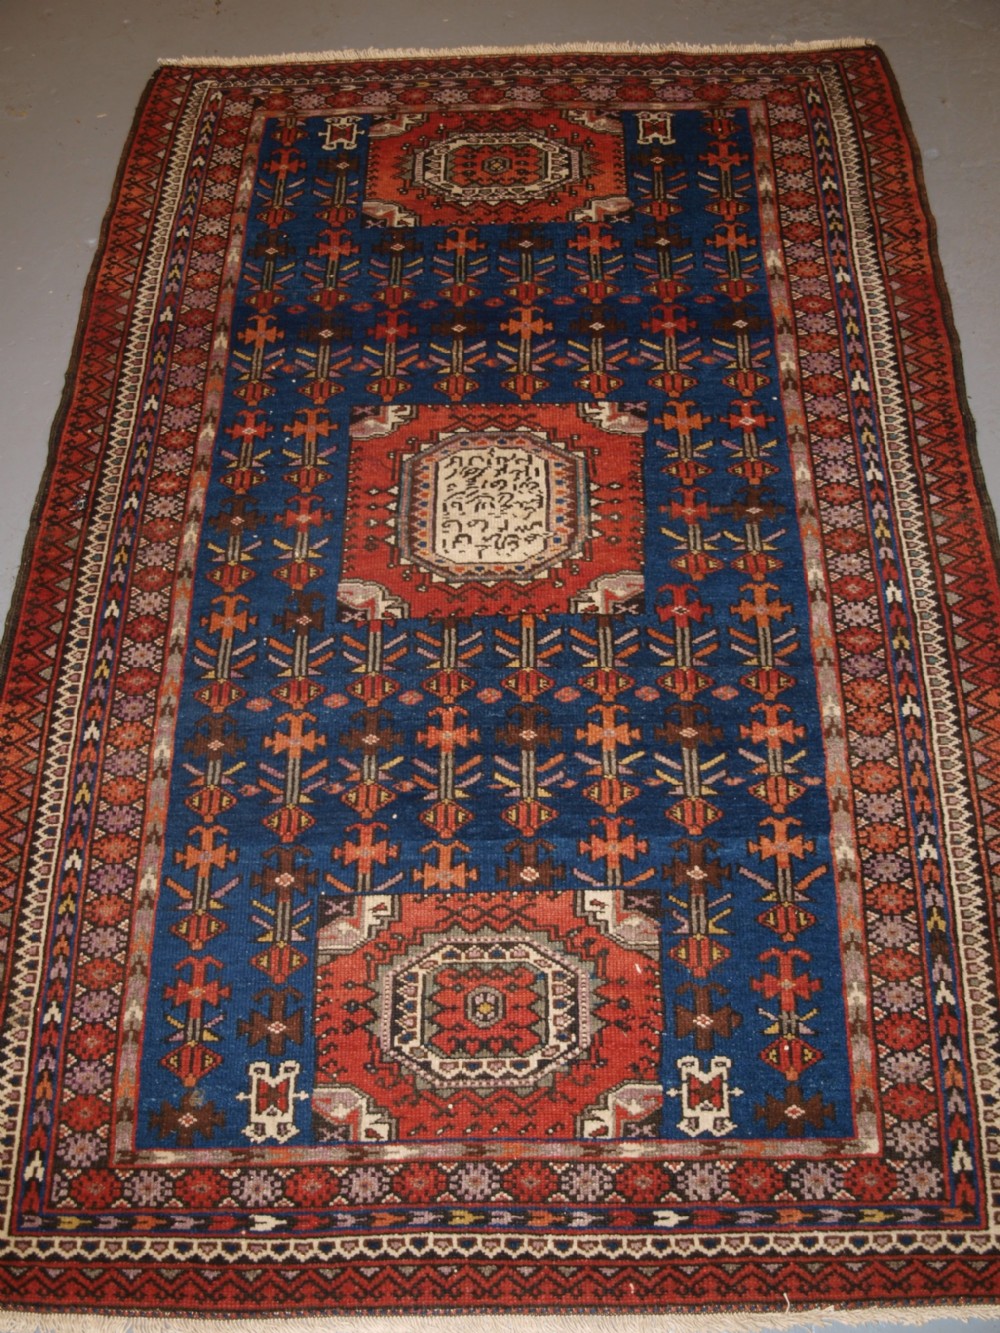 old kurdish rug unusual design large inscription with date circa 190020